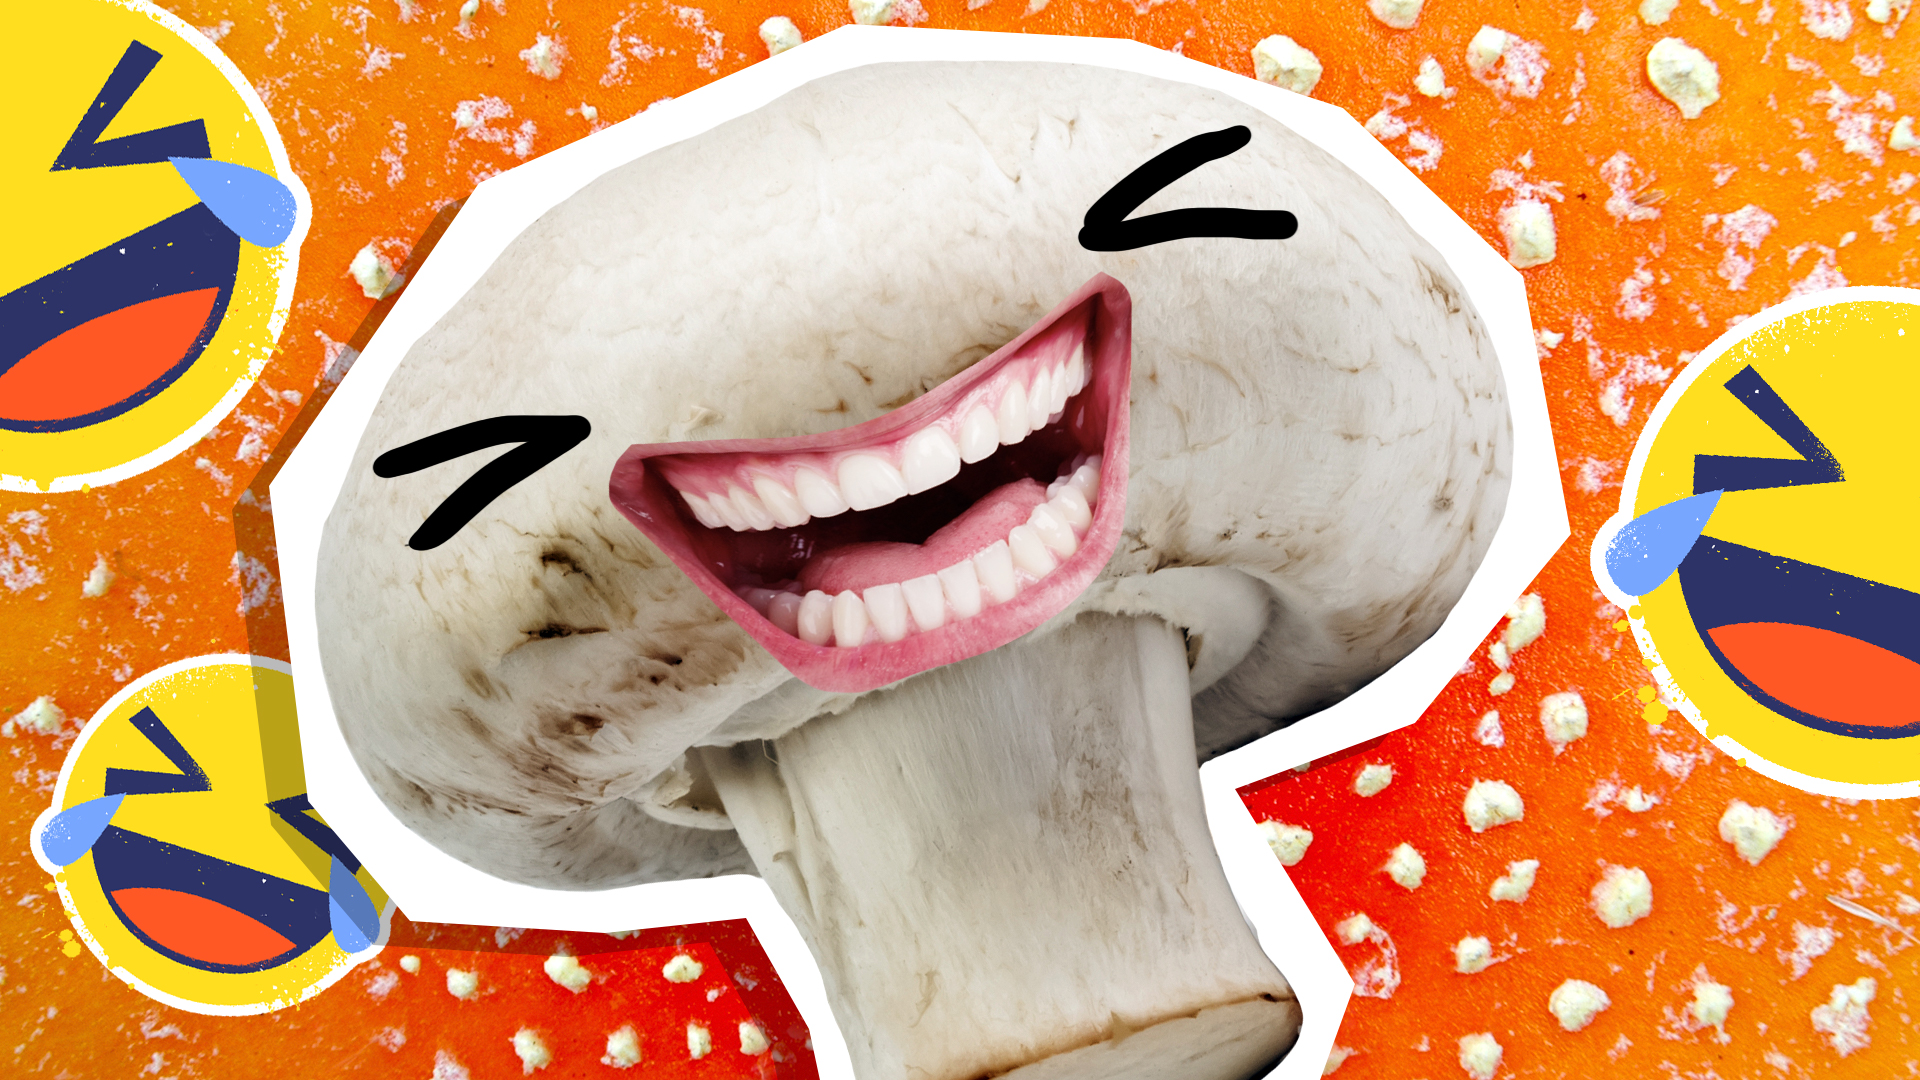 funny smurf jokes with mushroom